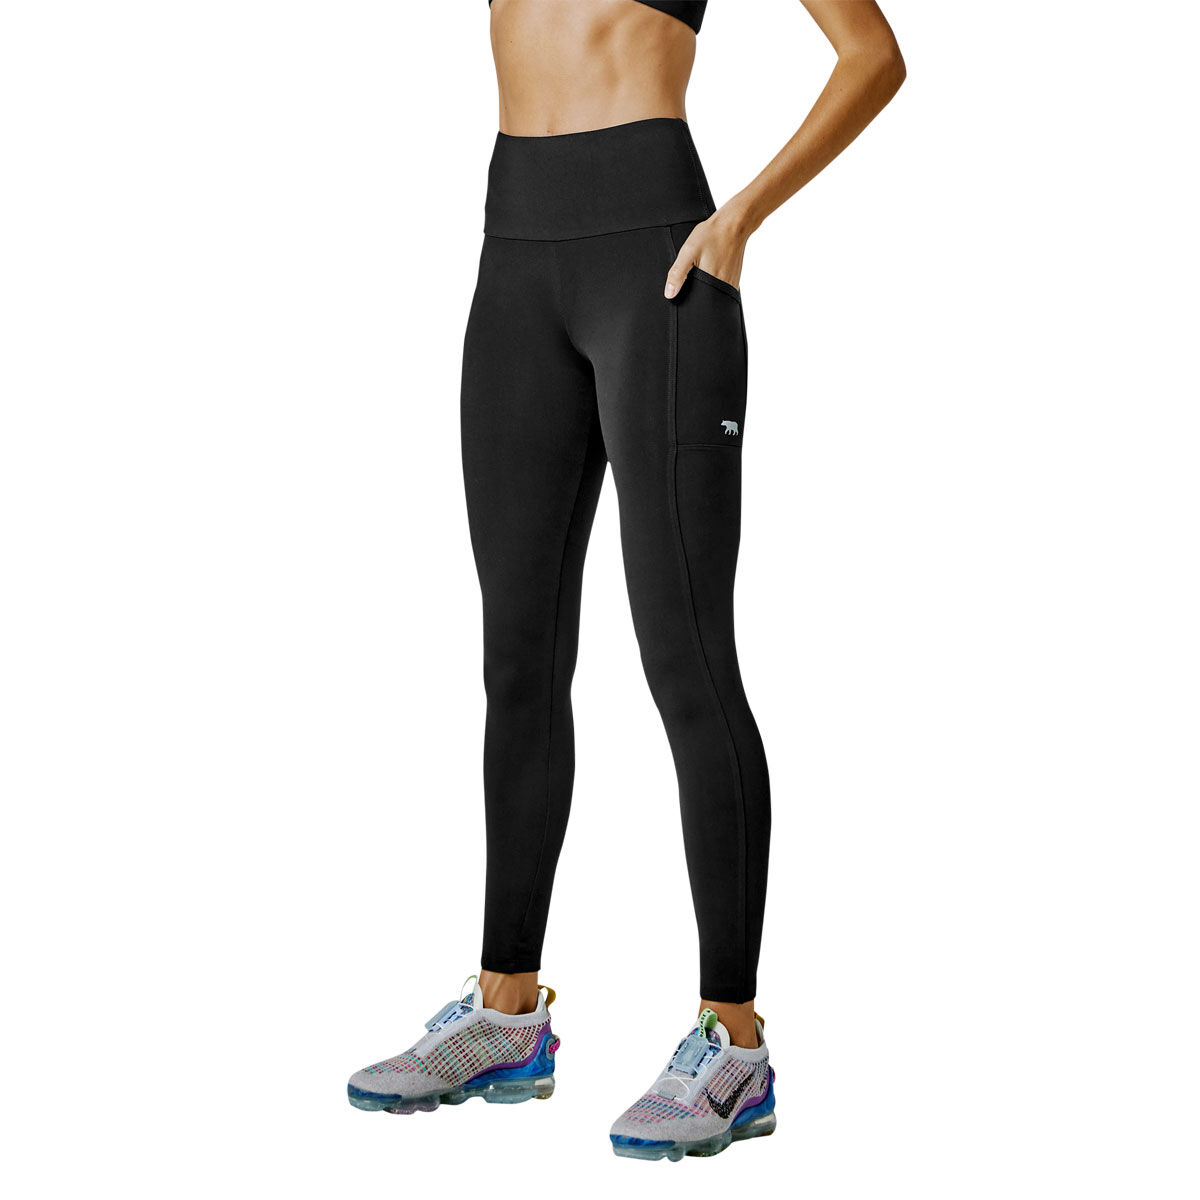 Running & Workout Leggings for Women. Running Bare Pocket Tights